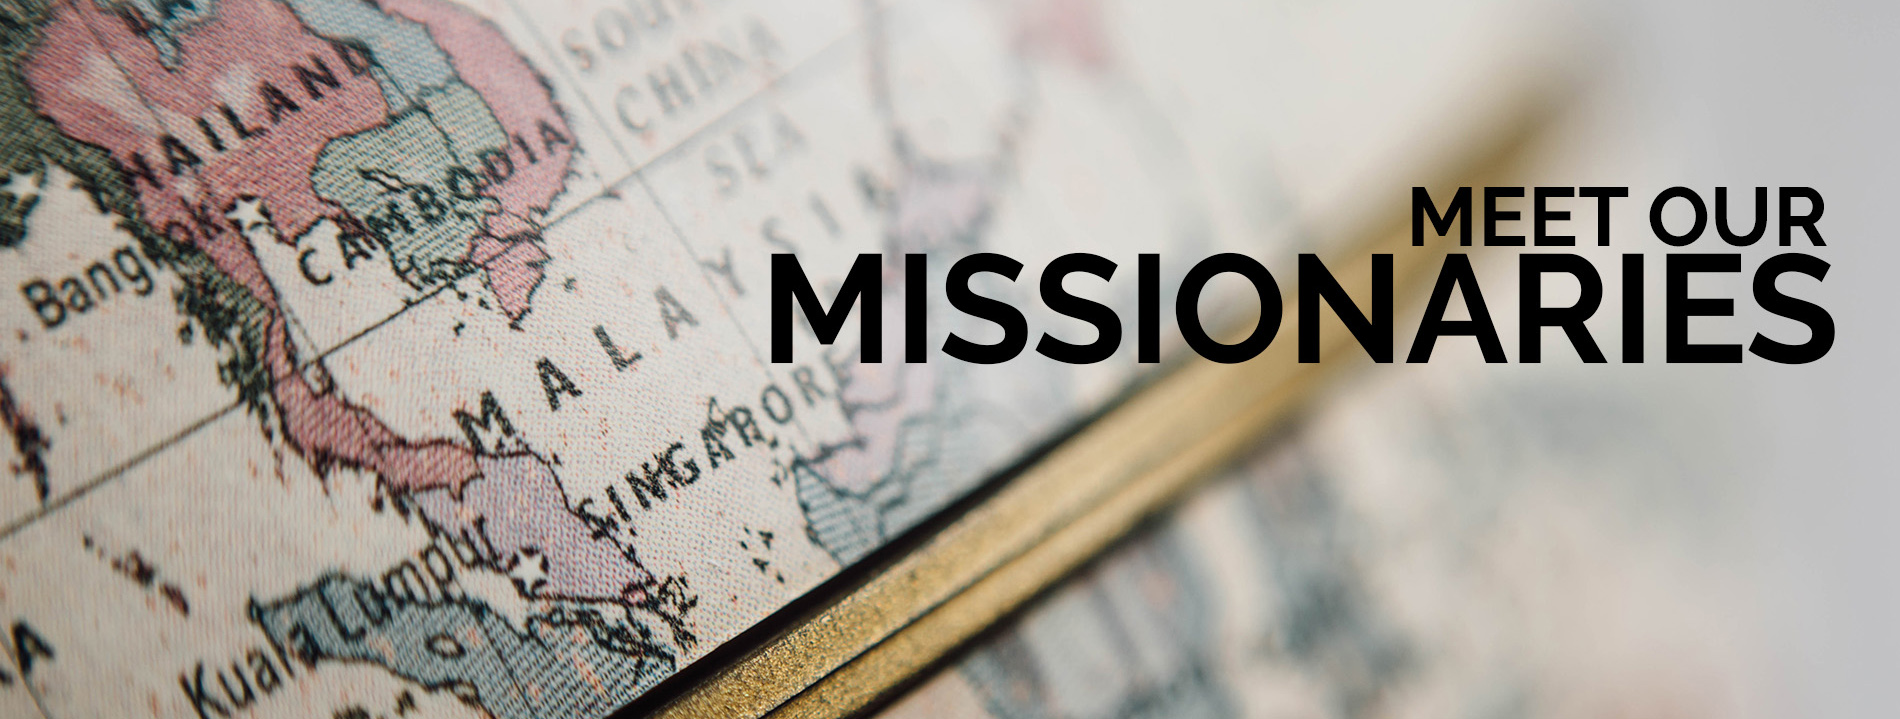 missionaries.jpg